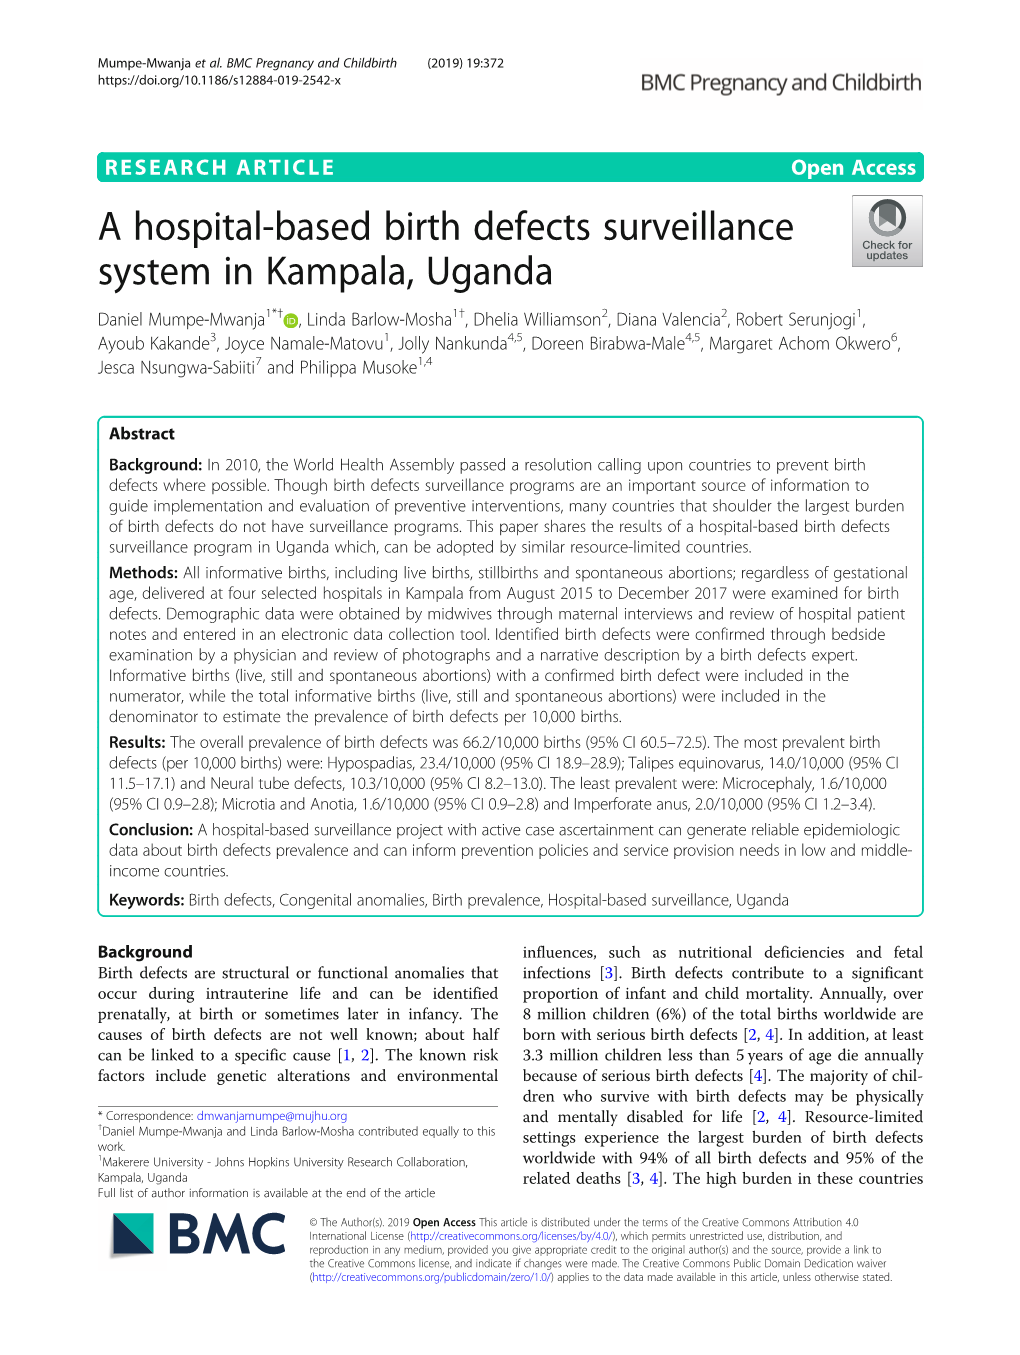 A Hospital-Based Birth Defects Surveillance System in Kampala